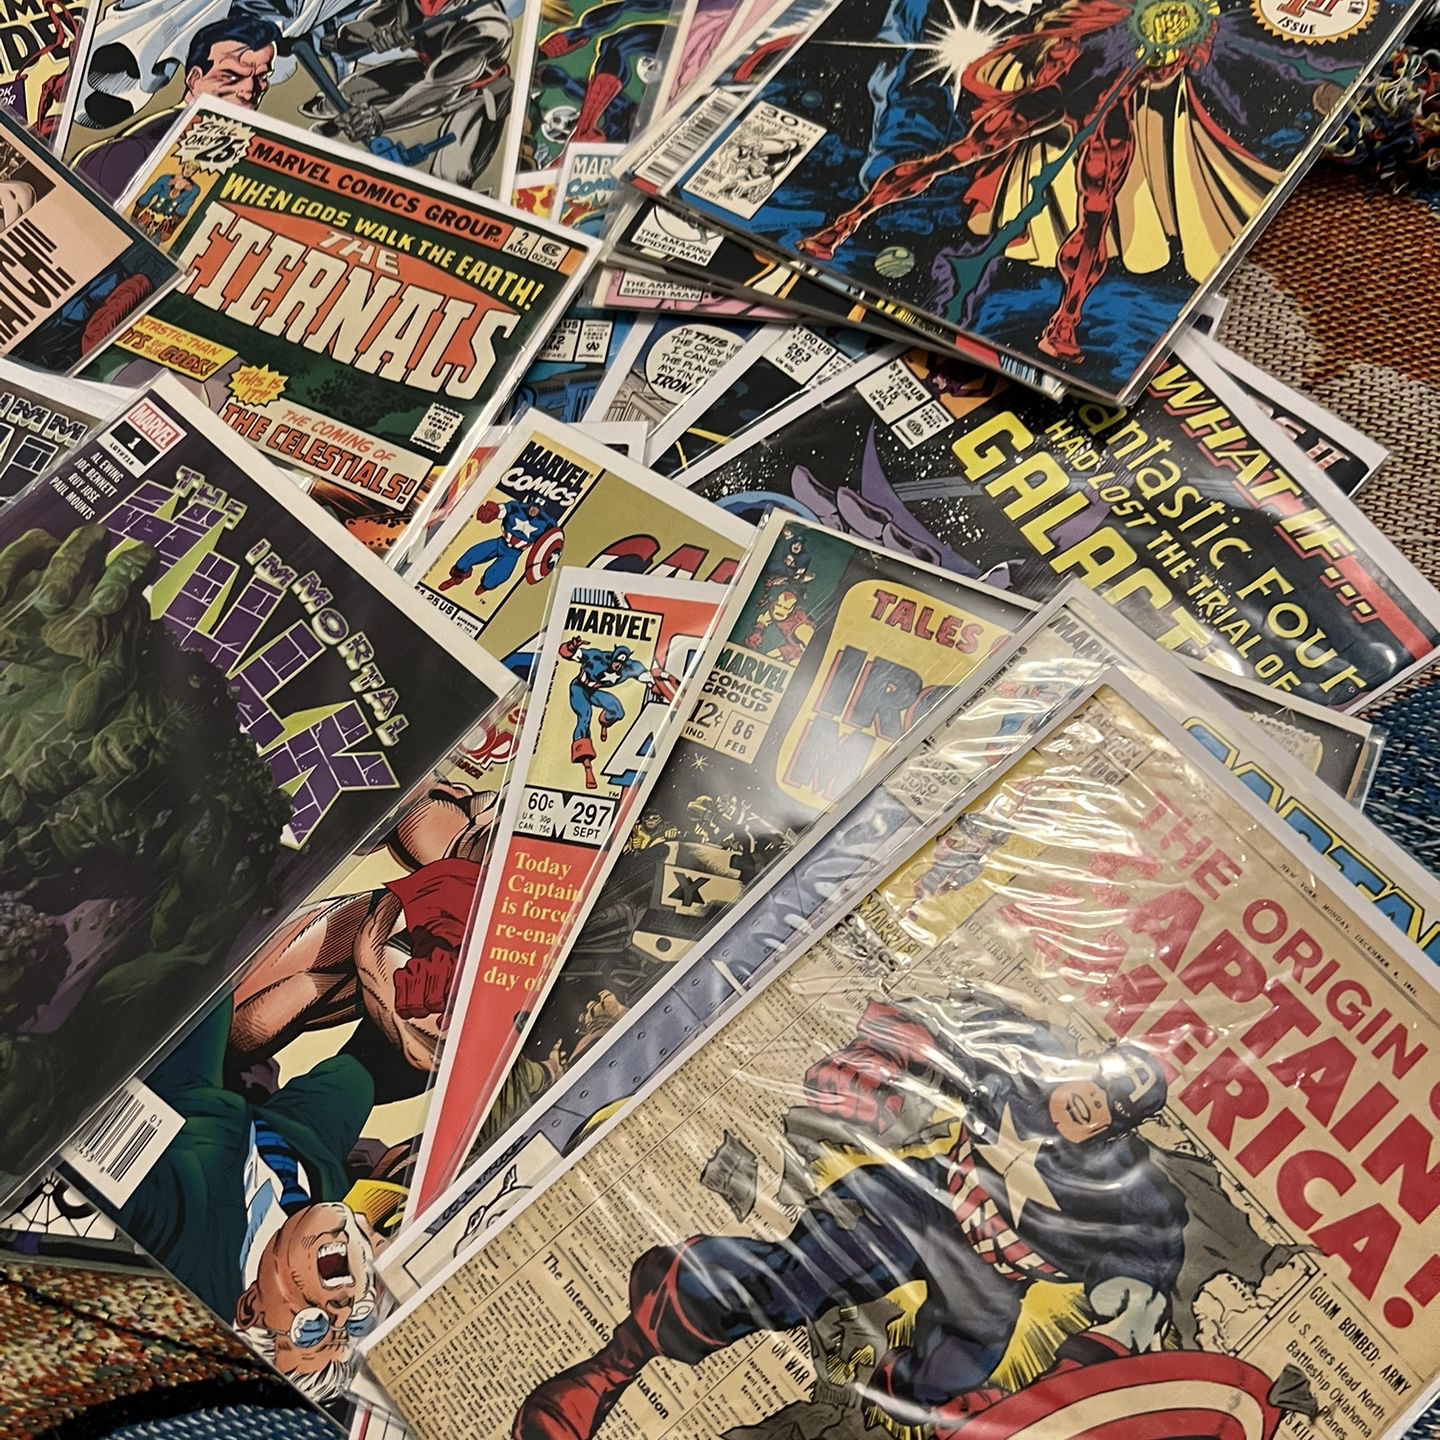 Marvel Keys Low Print Darkhawk Issues Spider-Man Captain America Deadpool Were Issues Keys Awesome Lot 